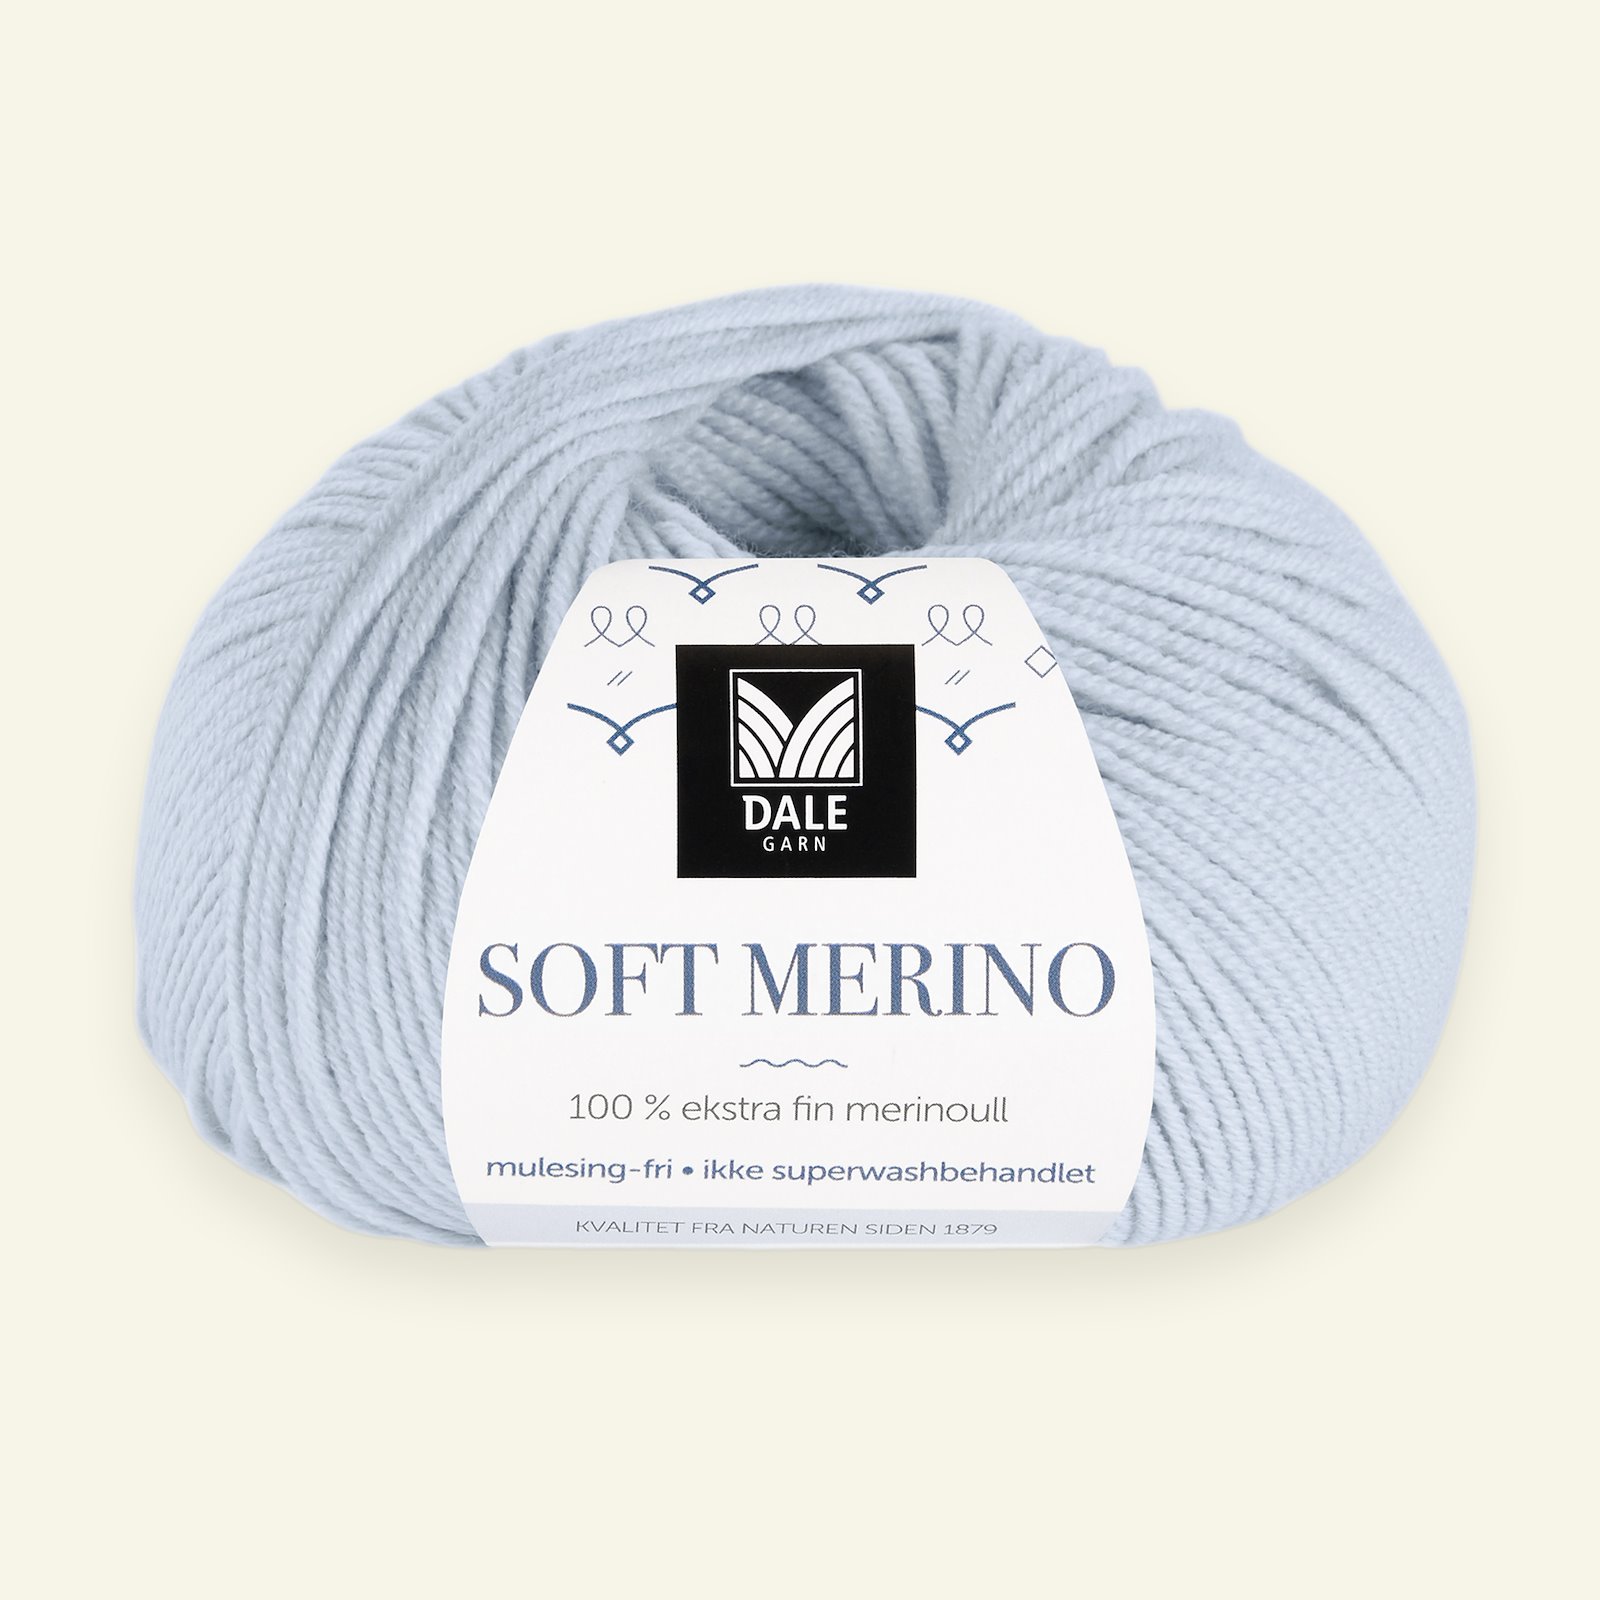 Dale Garn, 100% extra fine merino wool yarn, "Soft Merino", light blue 90000332_pack